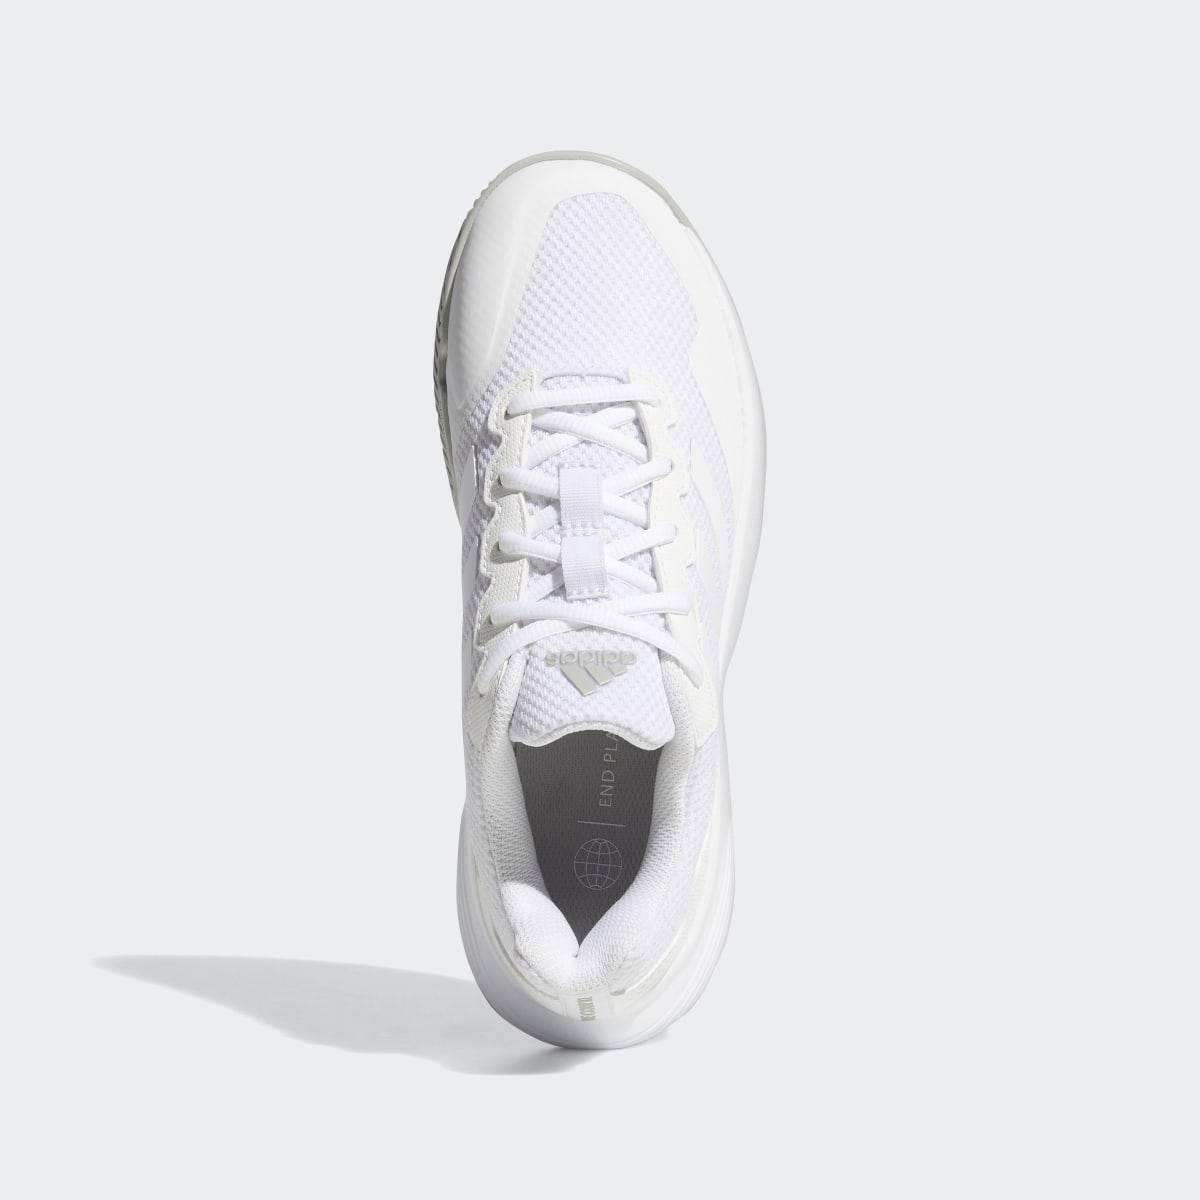 Adidas Gamecourt 2.0 Tennis Shoes. 6